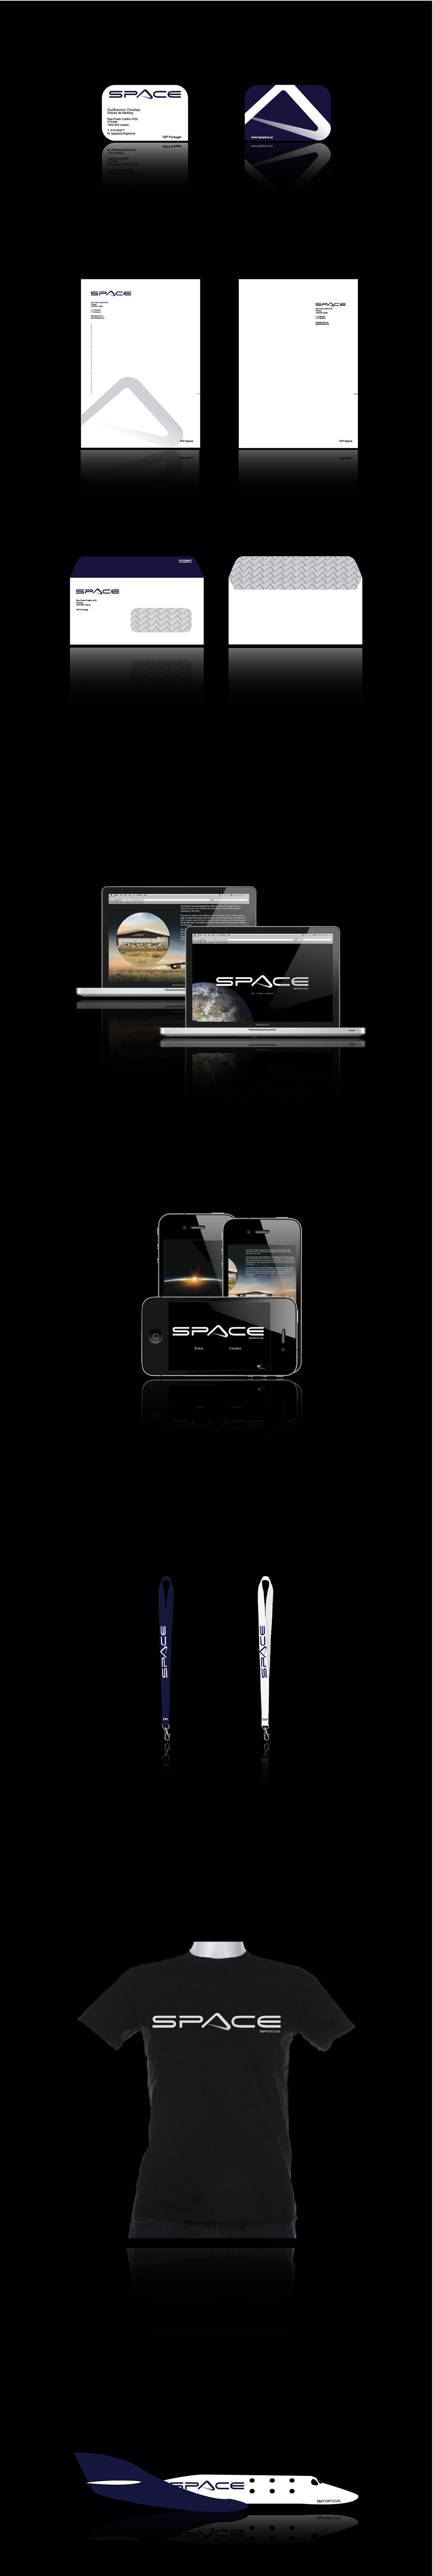 Space  black espaço galatic TAP TAP Portugal